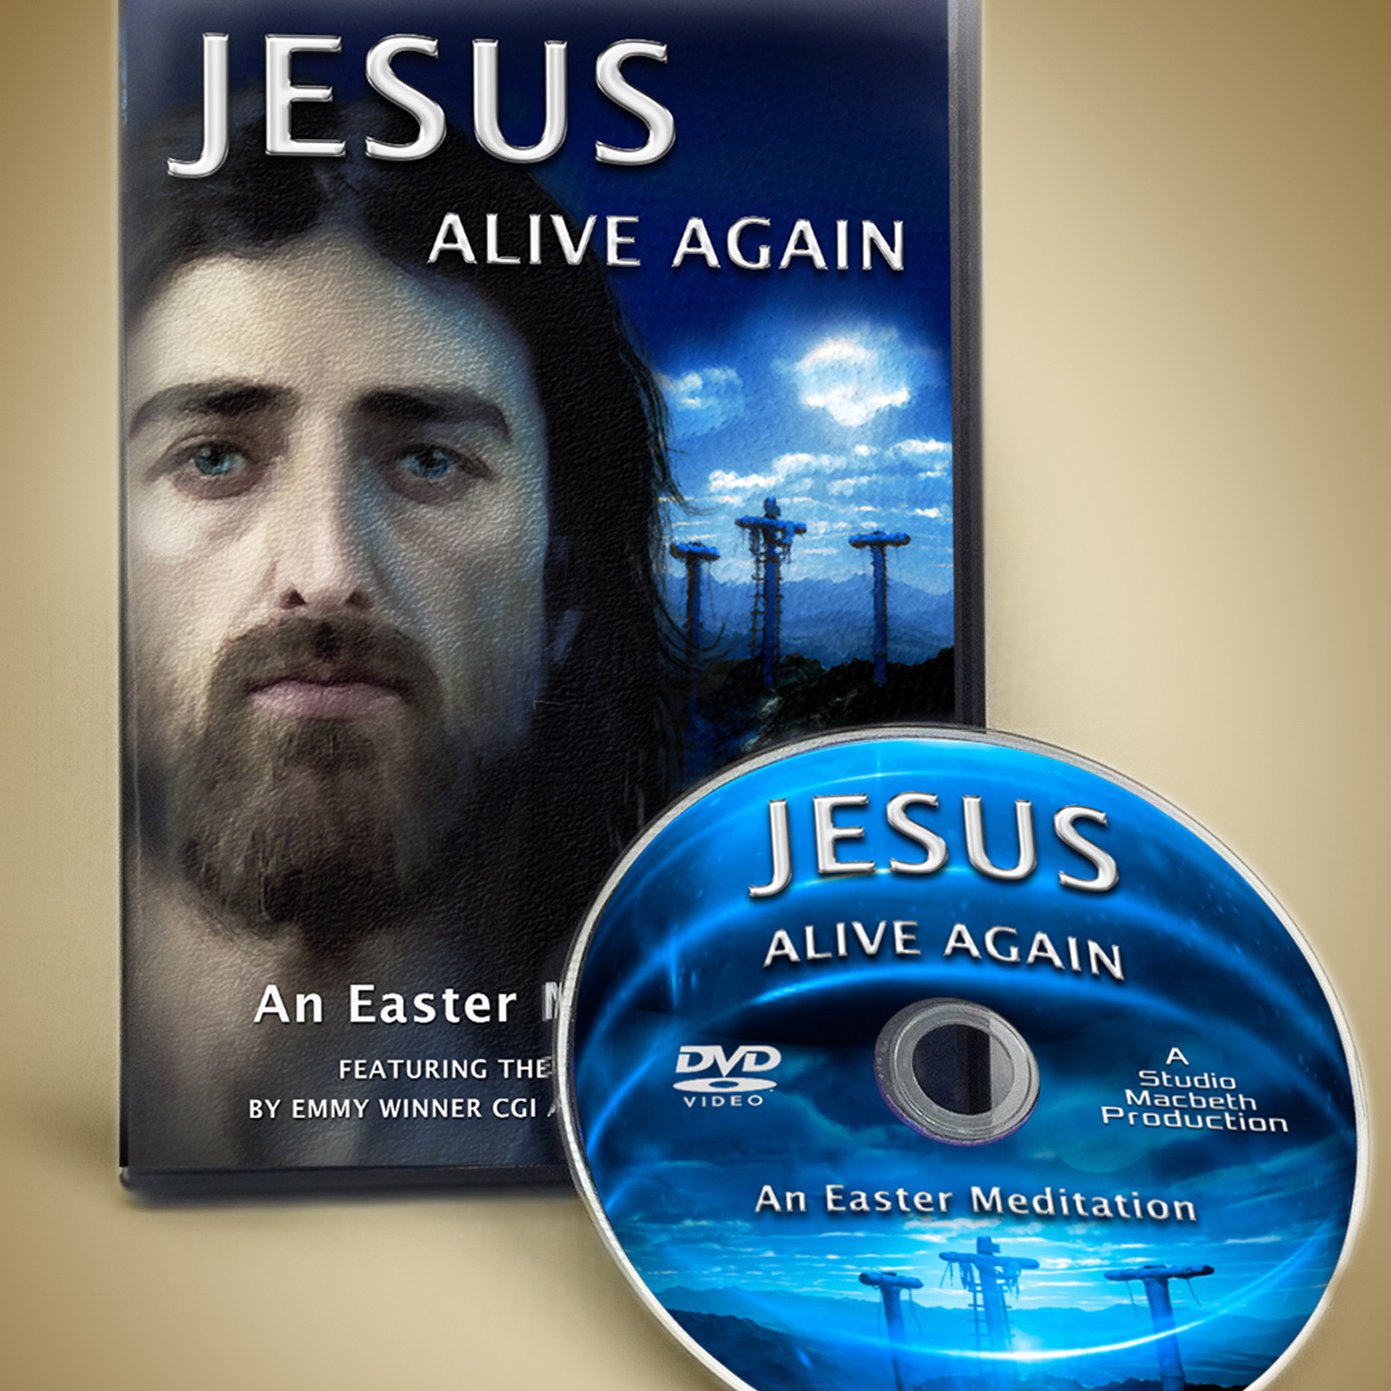 Jesus-pictures-DVD-2 square crop.jpg